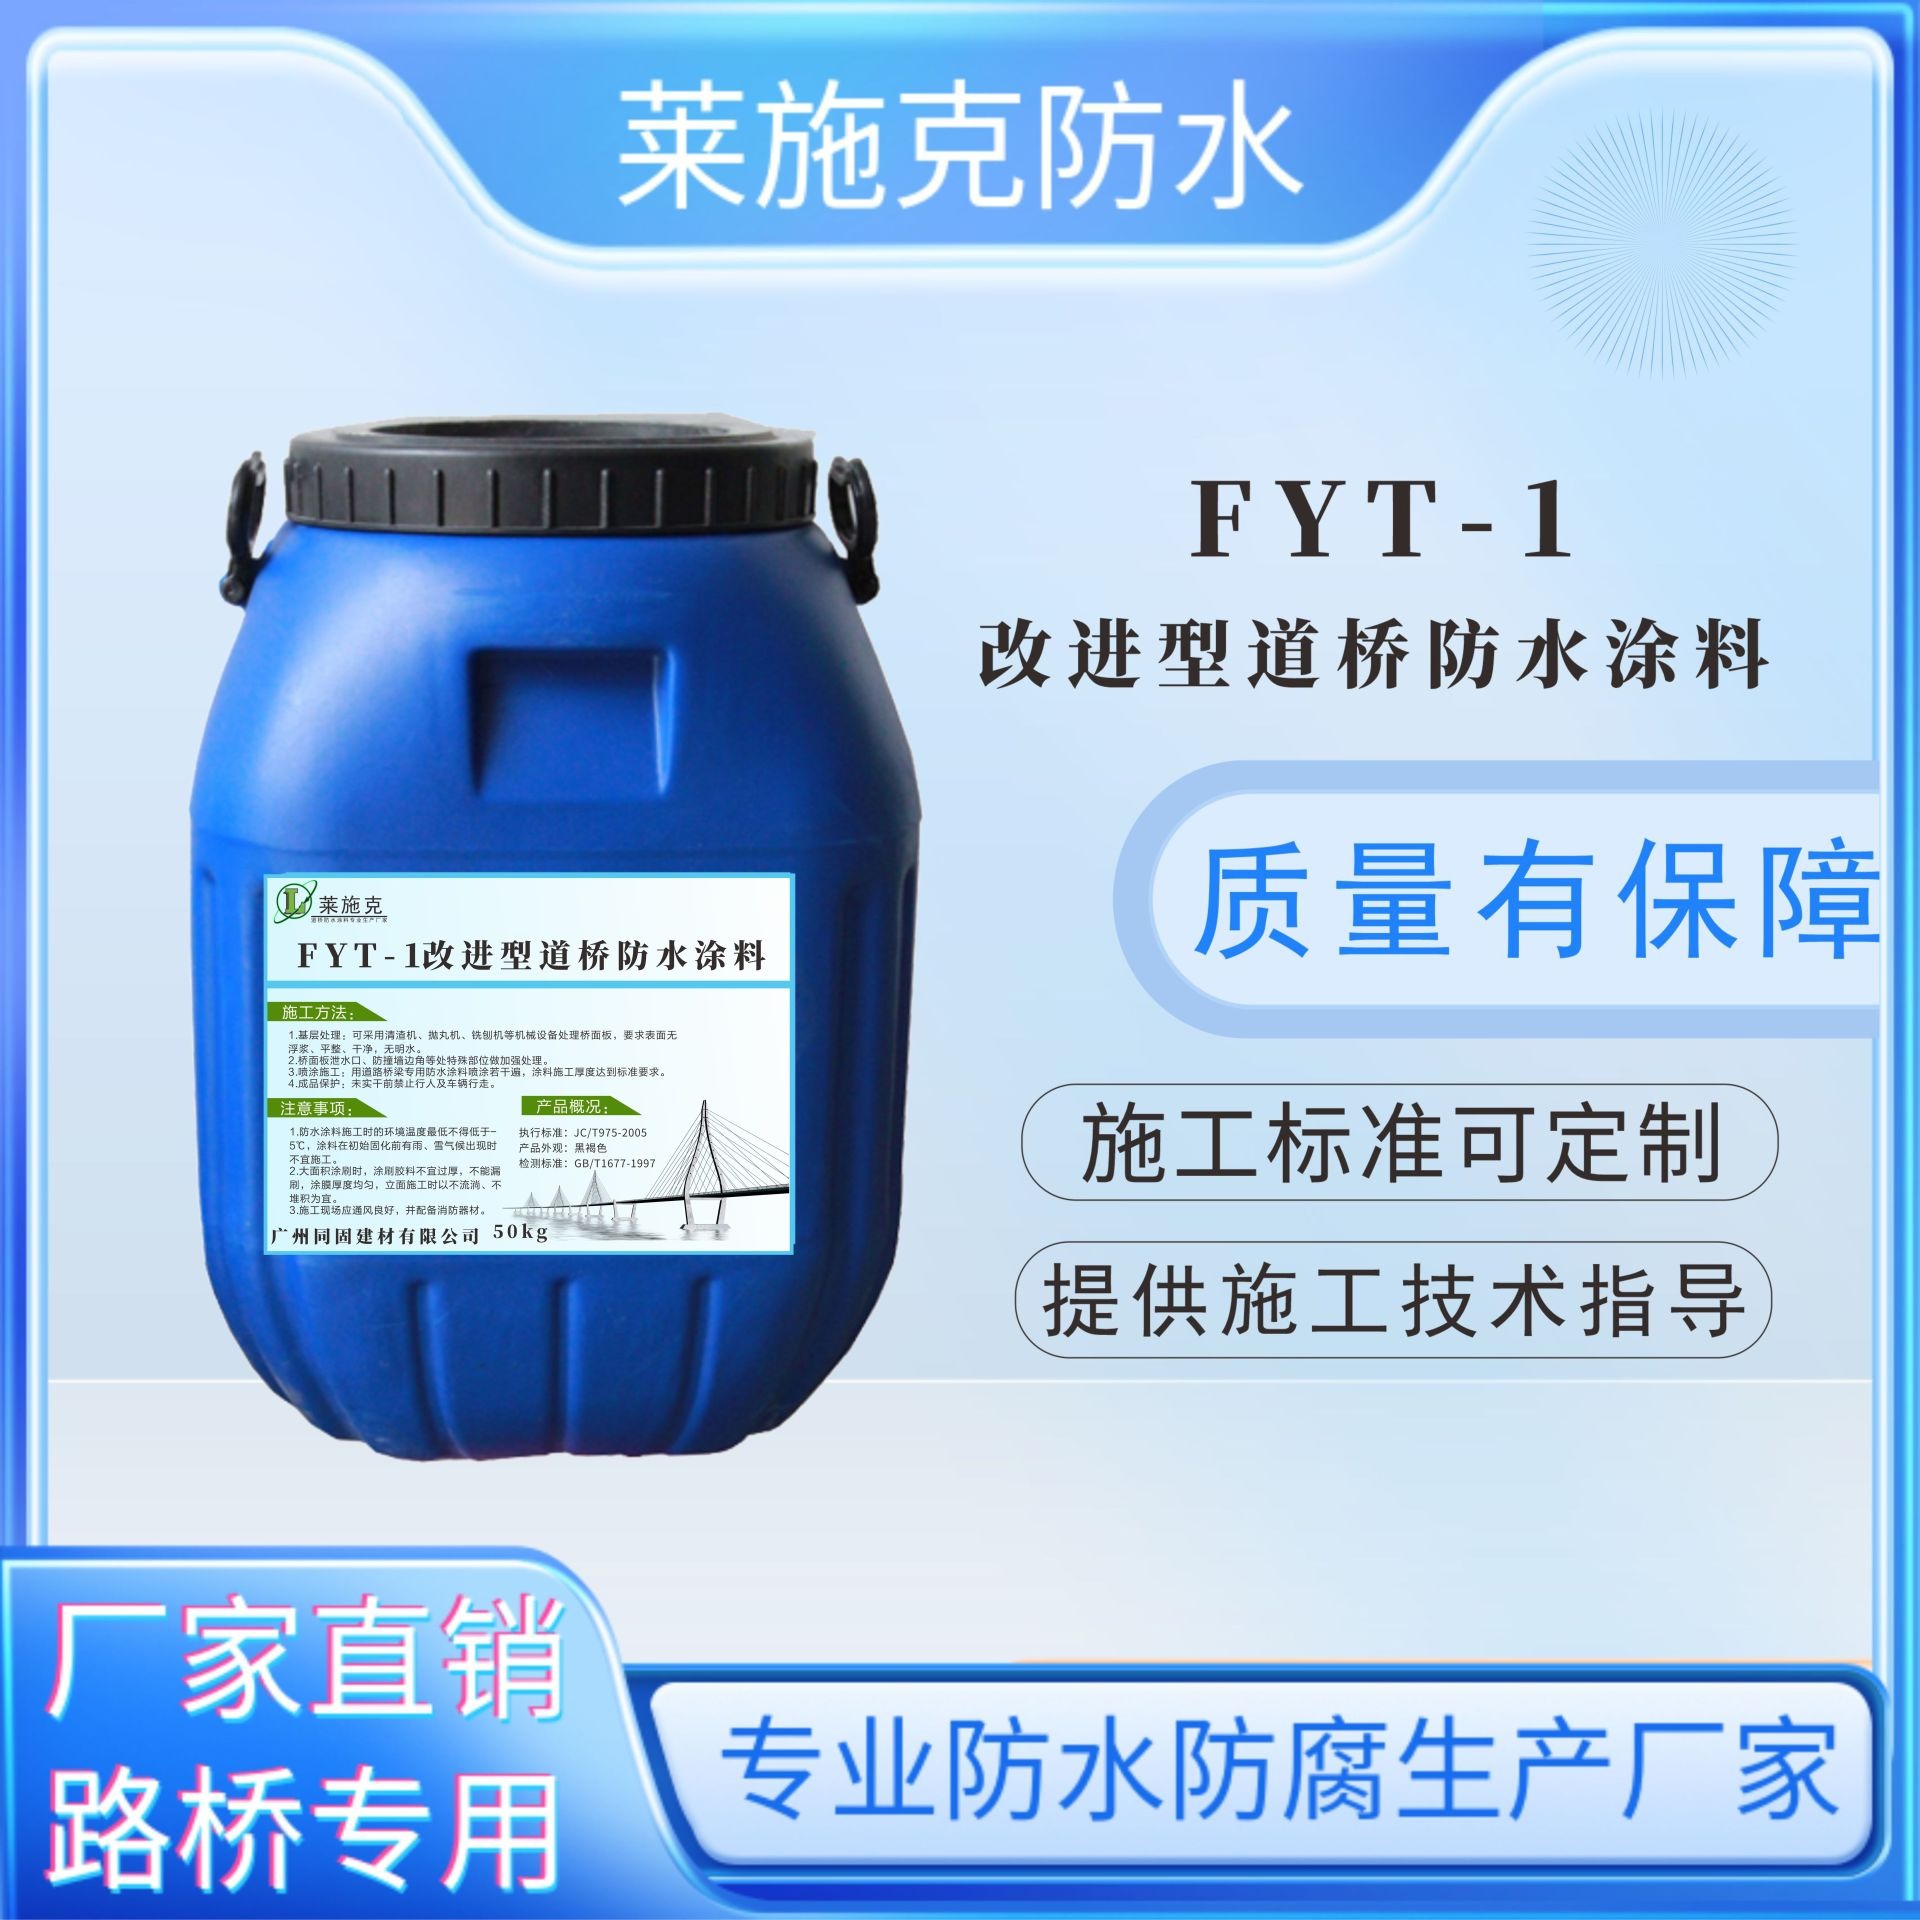 FYT-1改进型桥面防水涂料执行标准 符合国家生产标准 莱施克广州防水厂家